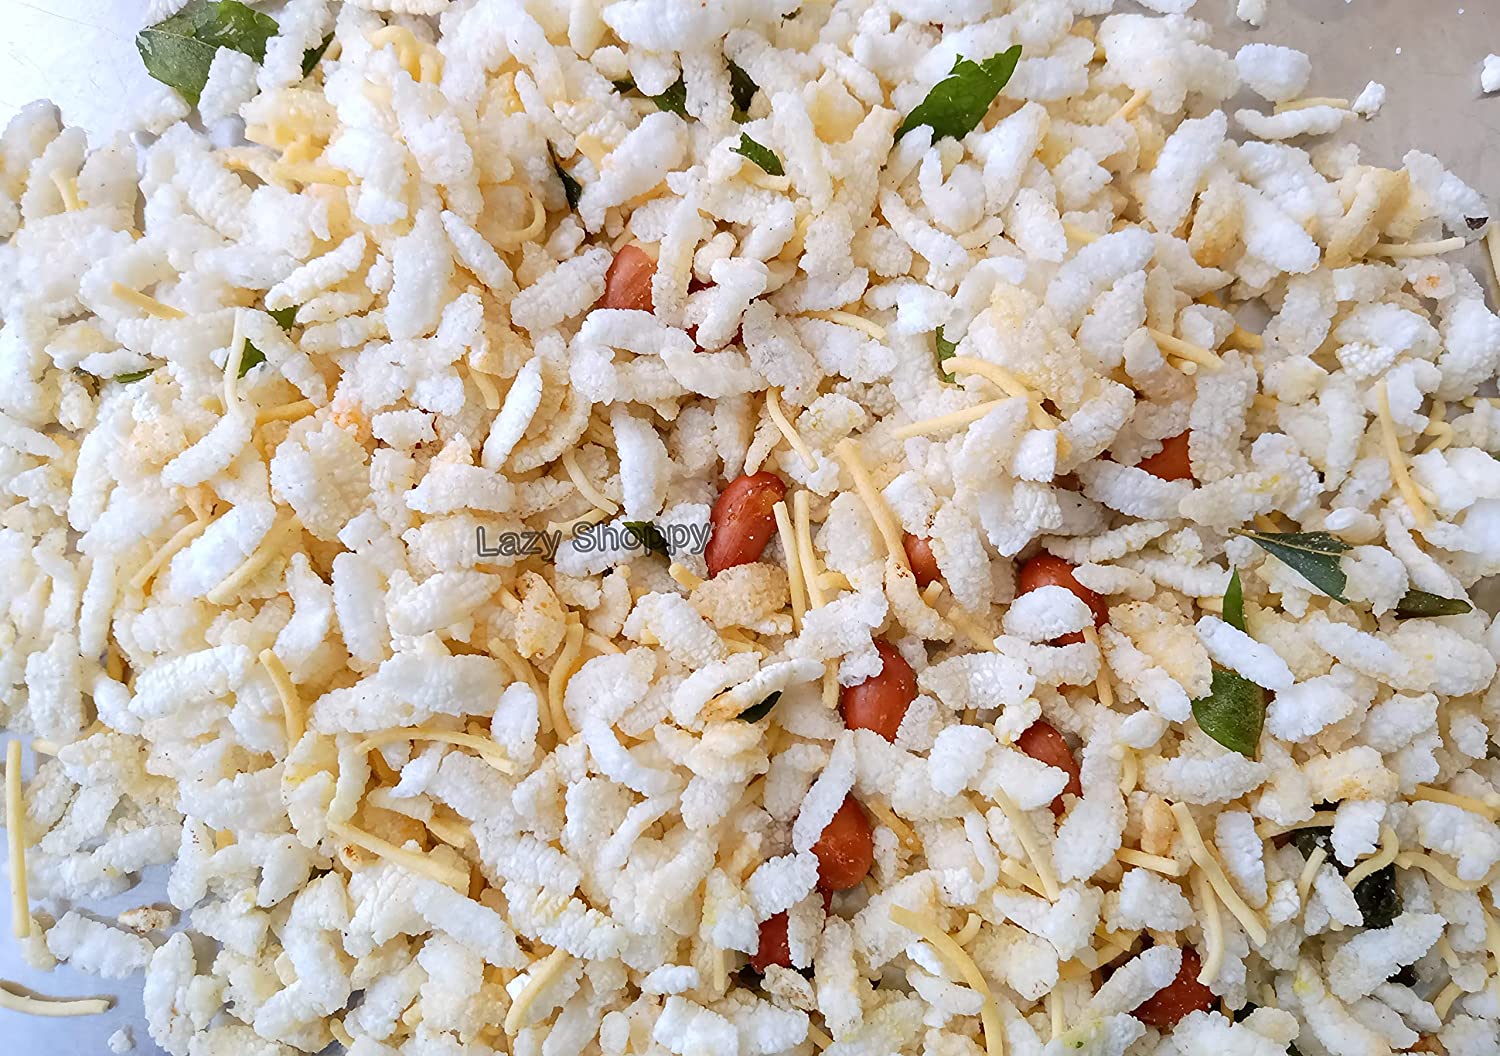 Lazy Shoppy Namkeen | Khatta Meetha Poha Mixture | Khatta Meetha | Khatta Mitha Mixture Snack | Poha Jowar Chiwda | Healthy Diet Snack | Indian Snacks | Namkeen Poha Chiwda (250 Grams)